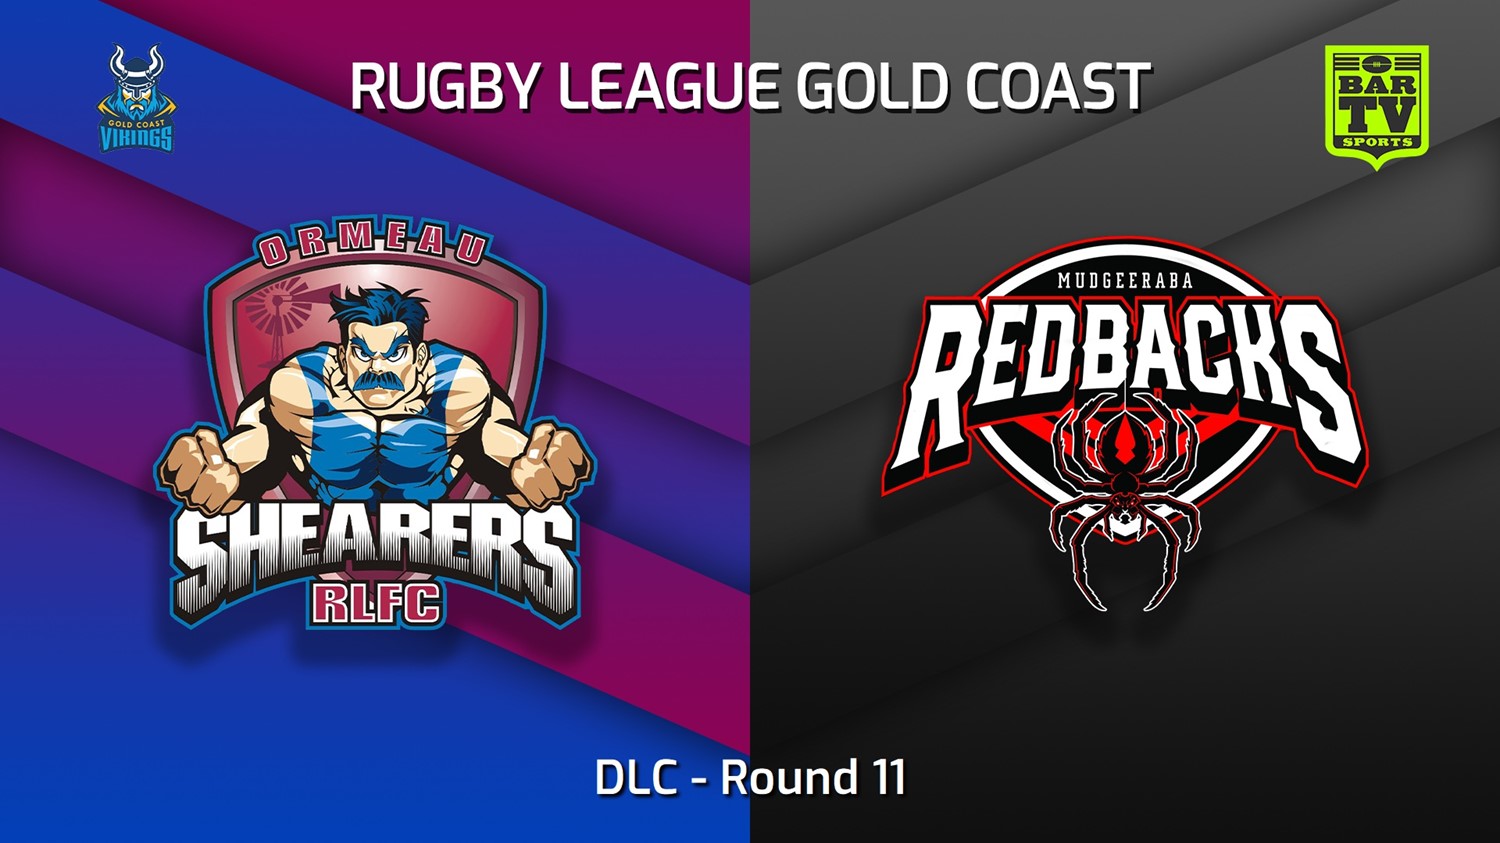 220619-Gold Coast Round 11 - DLC - Ormeau Shearers v Mudgeeraba Redbacks Slate Image